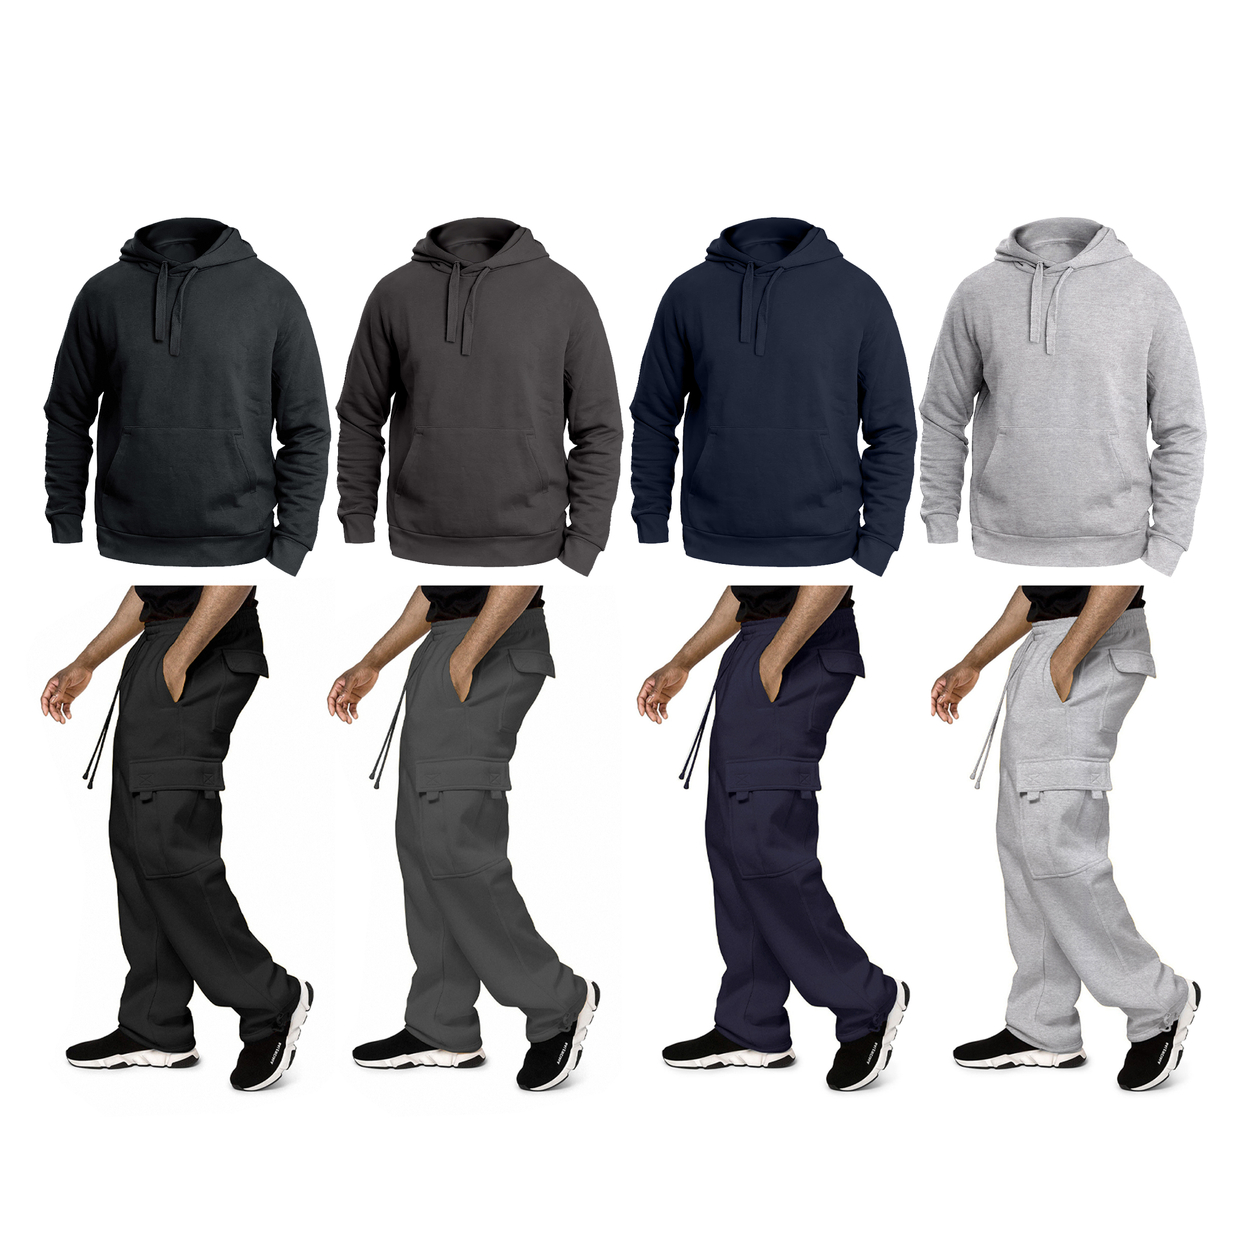 Multi-Pack: Big & Tall Men's Winter Warm Cozy Athletic Fleece Lined Multi-Pocket Cargo Sweatsuit - Black, 2-pack, Small